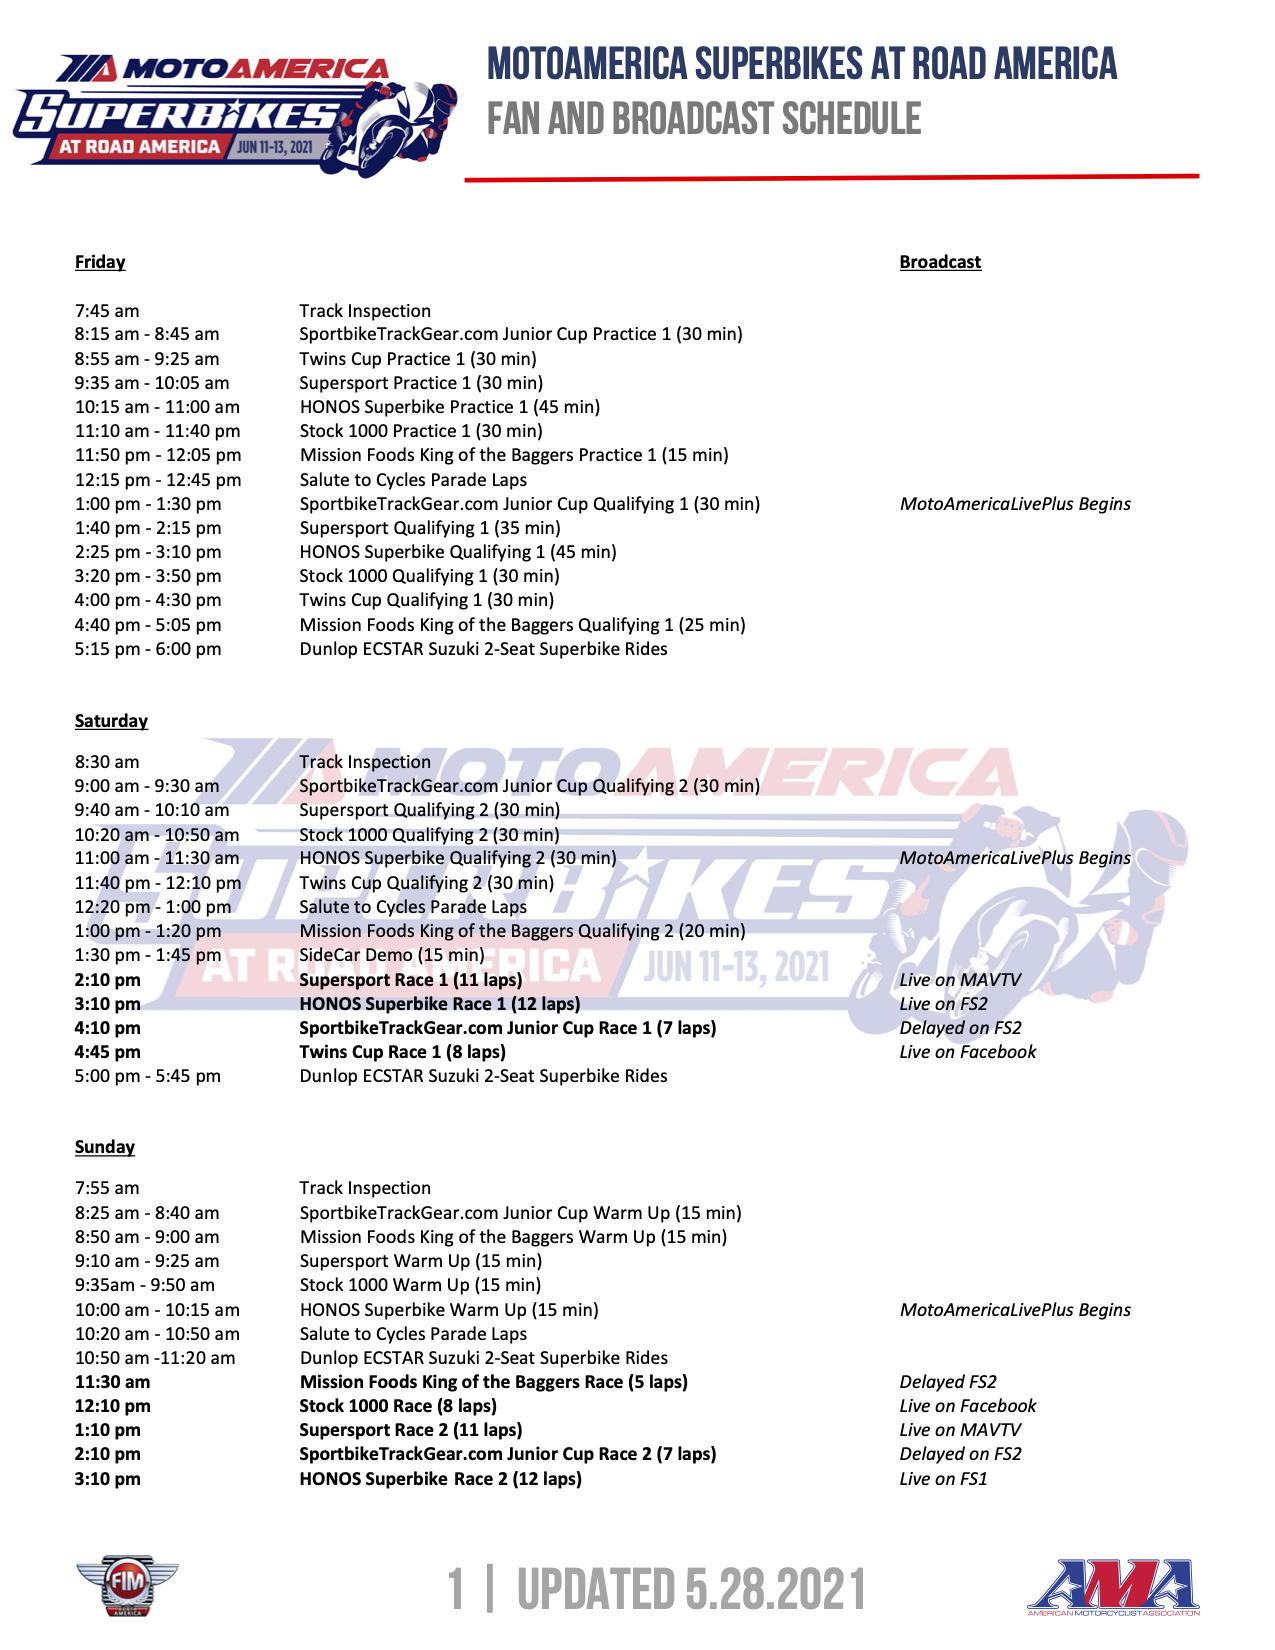 Broadcast schedule for Road America Scrolller